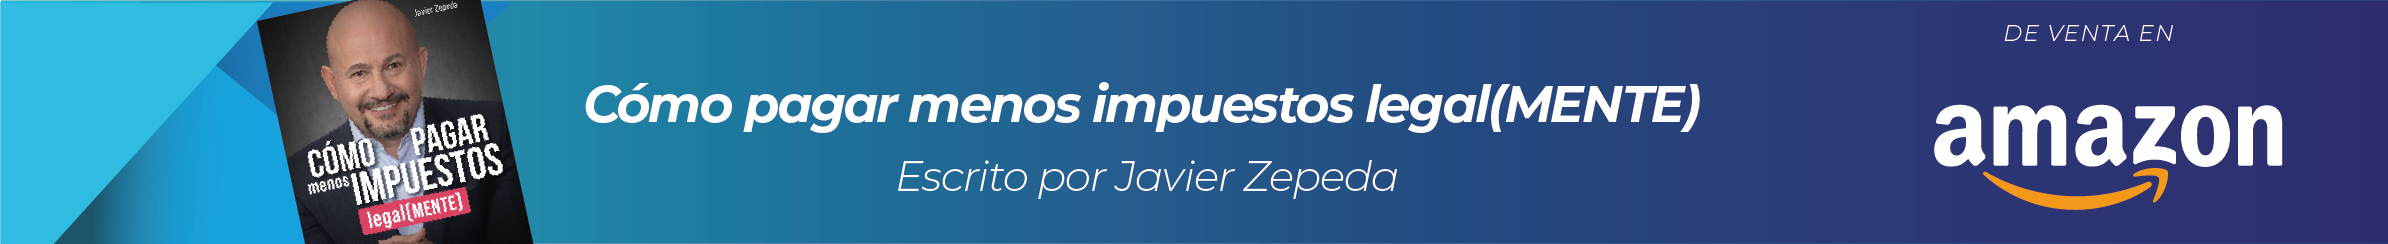 Libro Javier Zepeda